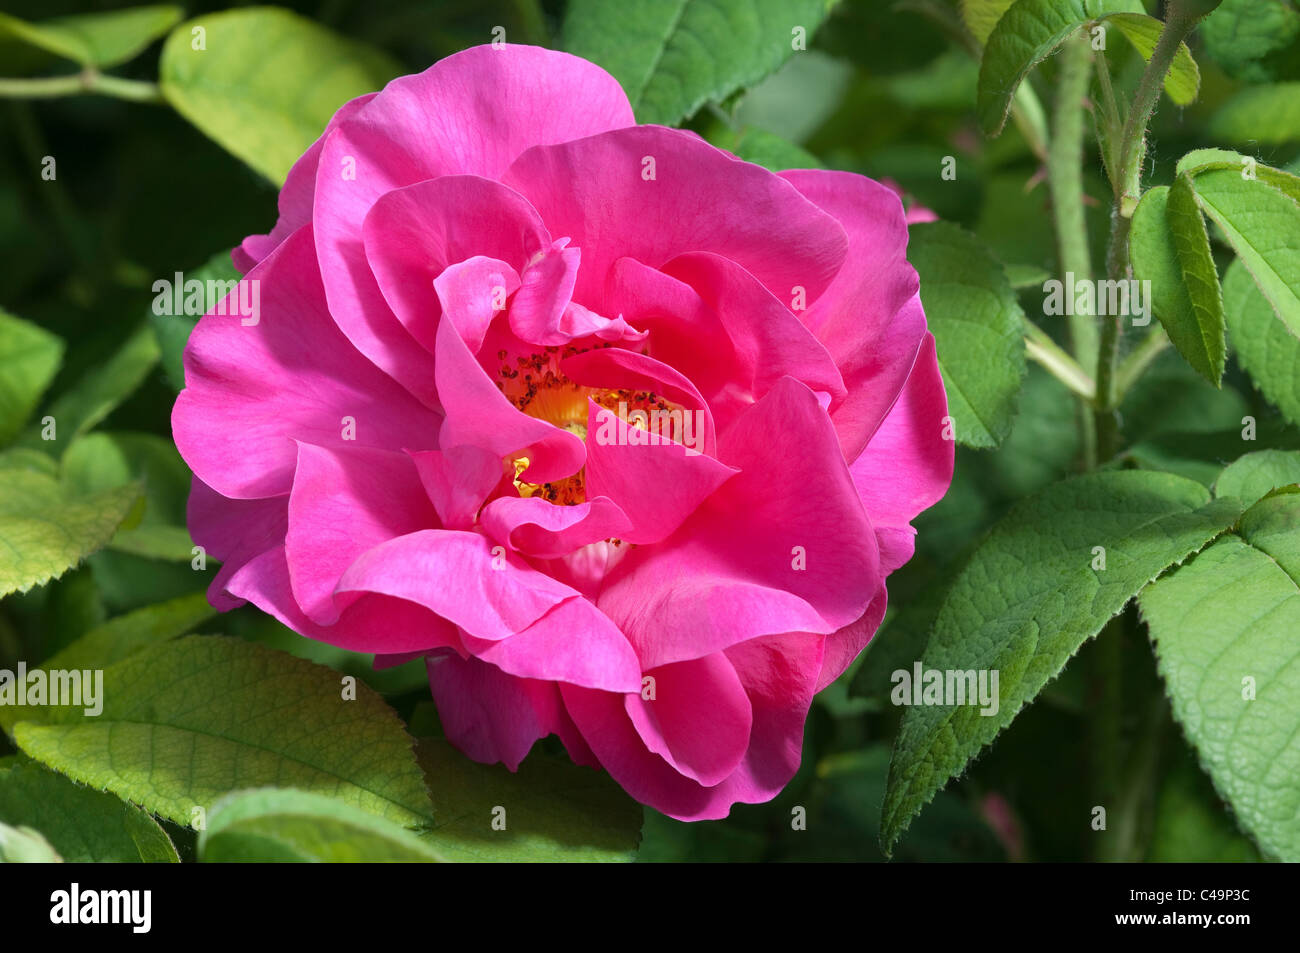 Apothecarys rosa (rosa gallica officinalis), fiore. Foto Stock